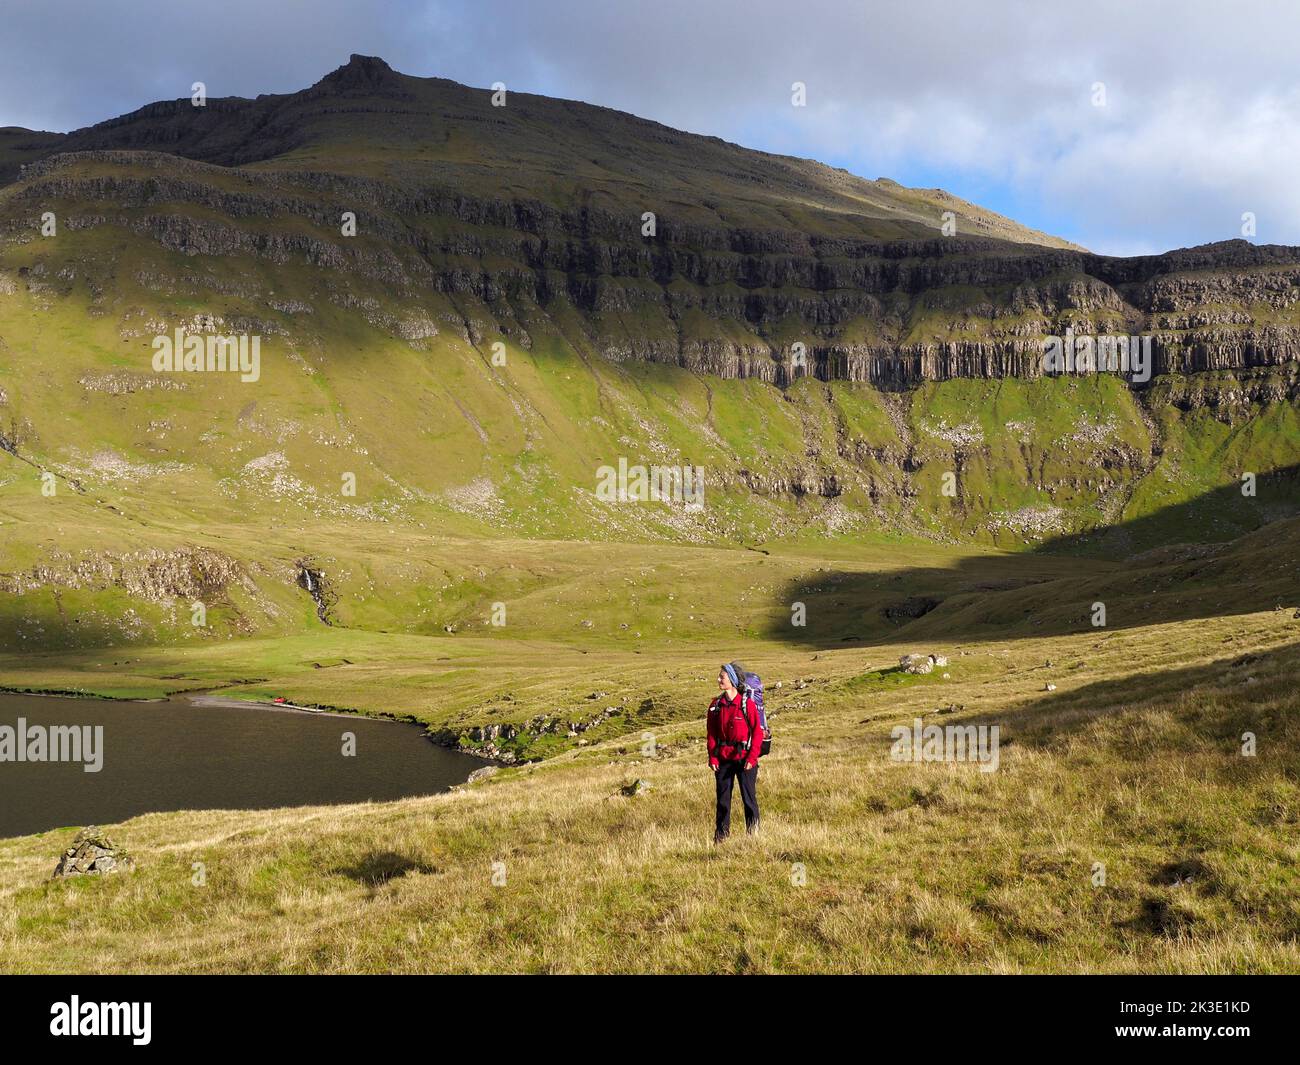 Hiking near Famjin, Suðuroy, Faroes Stock Photo